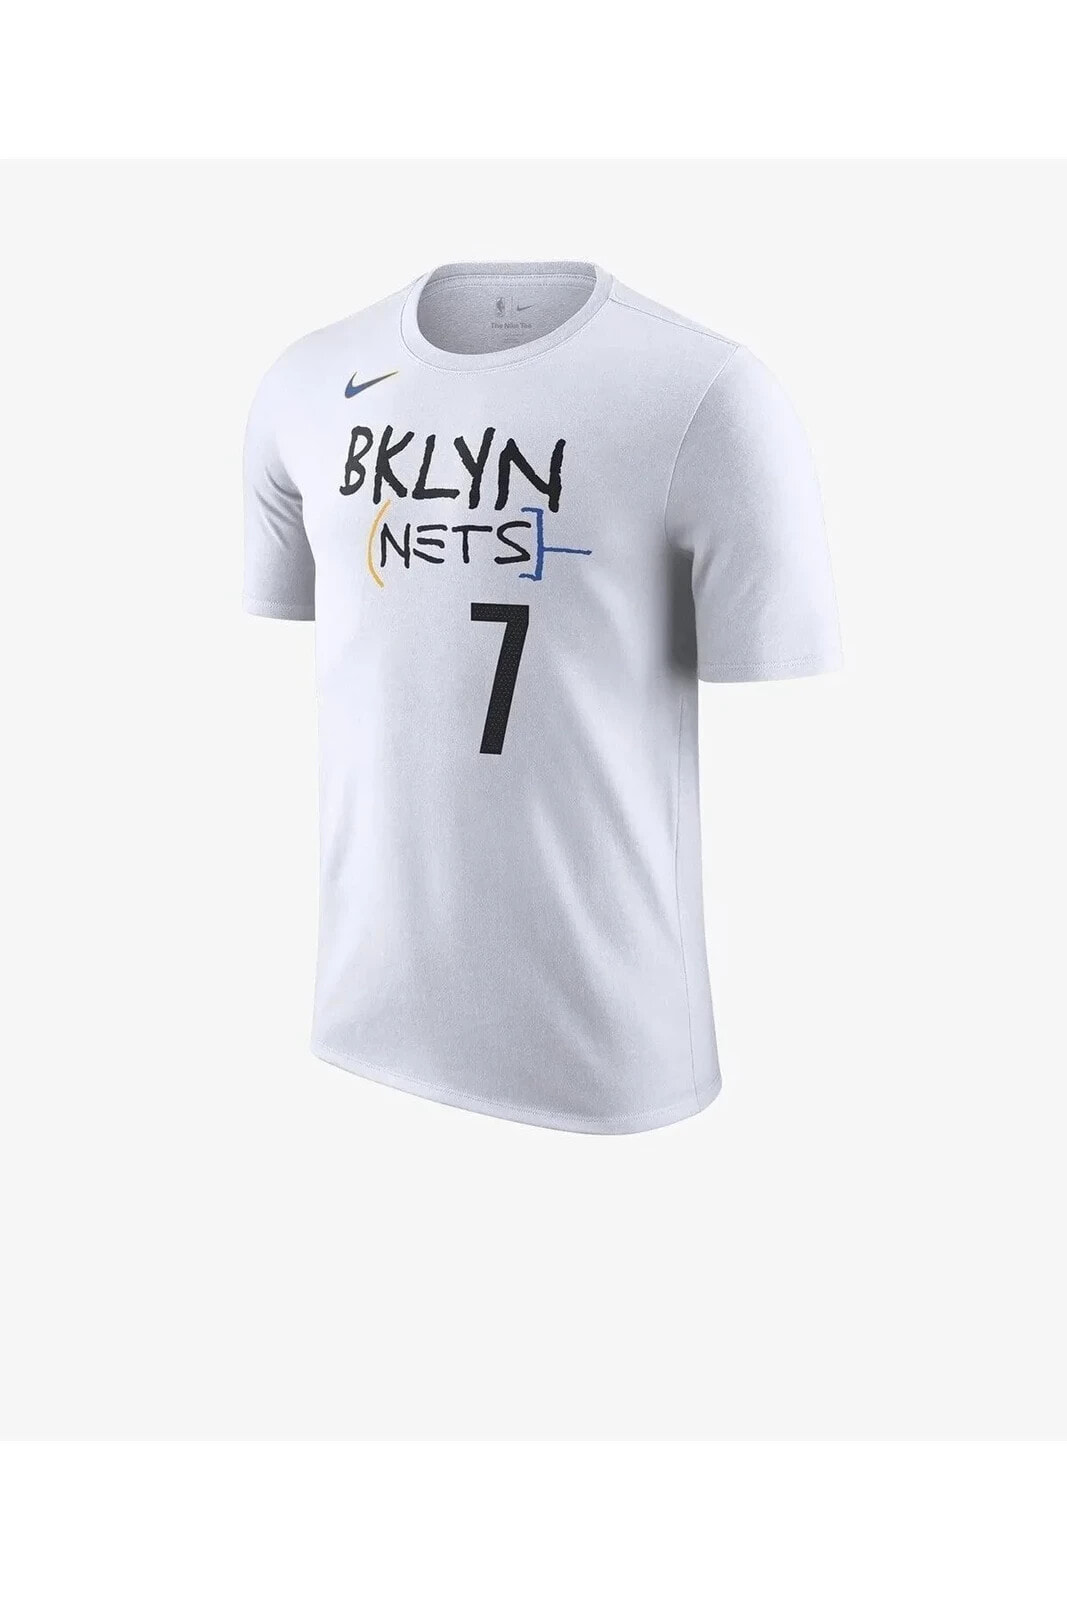 KD Kevin Durant Brooklyn Nets Beyaz Basketbol Tişört